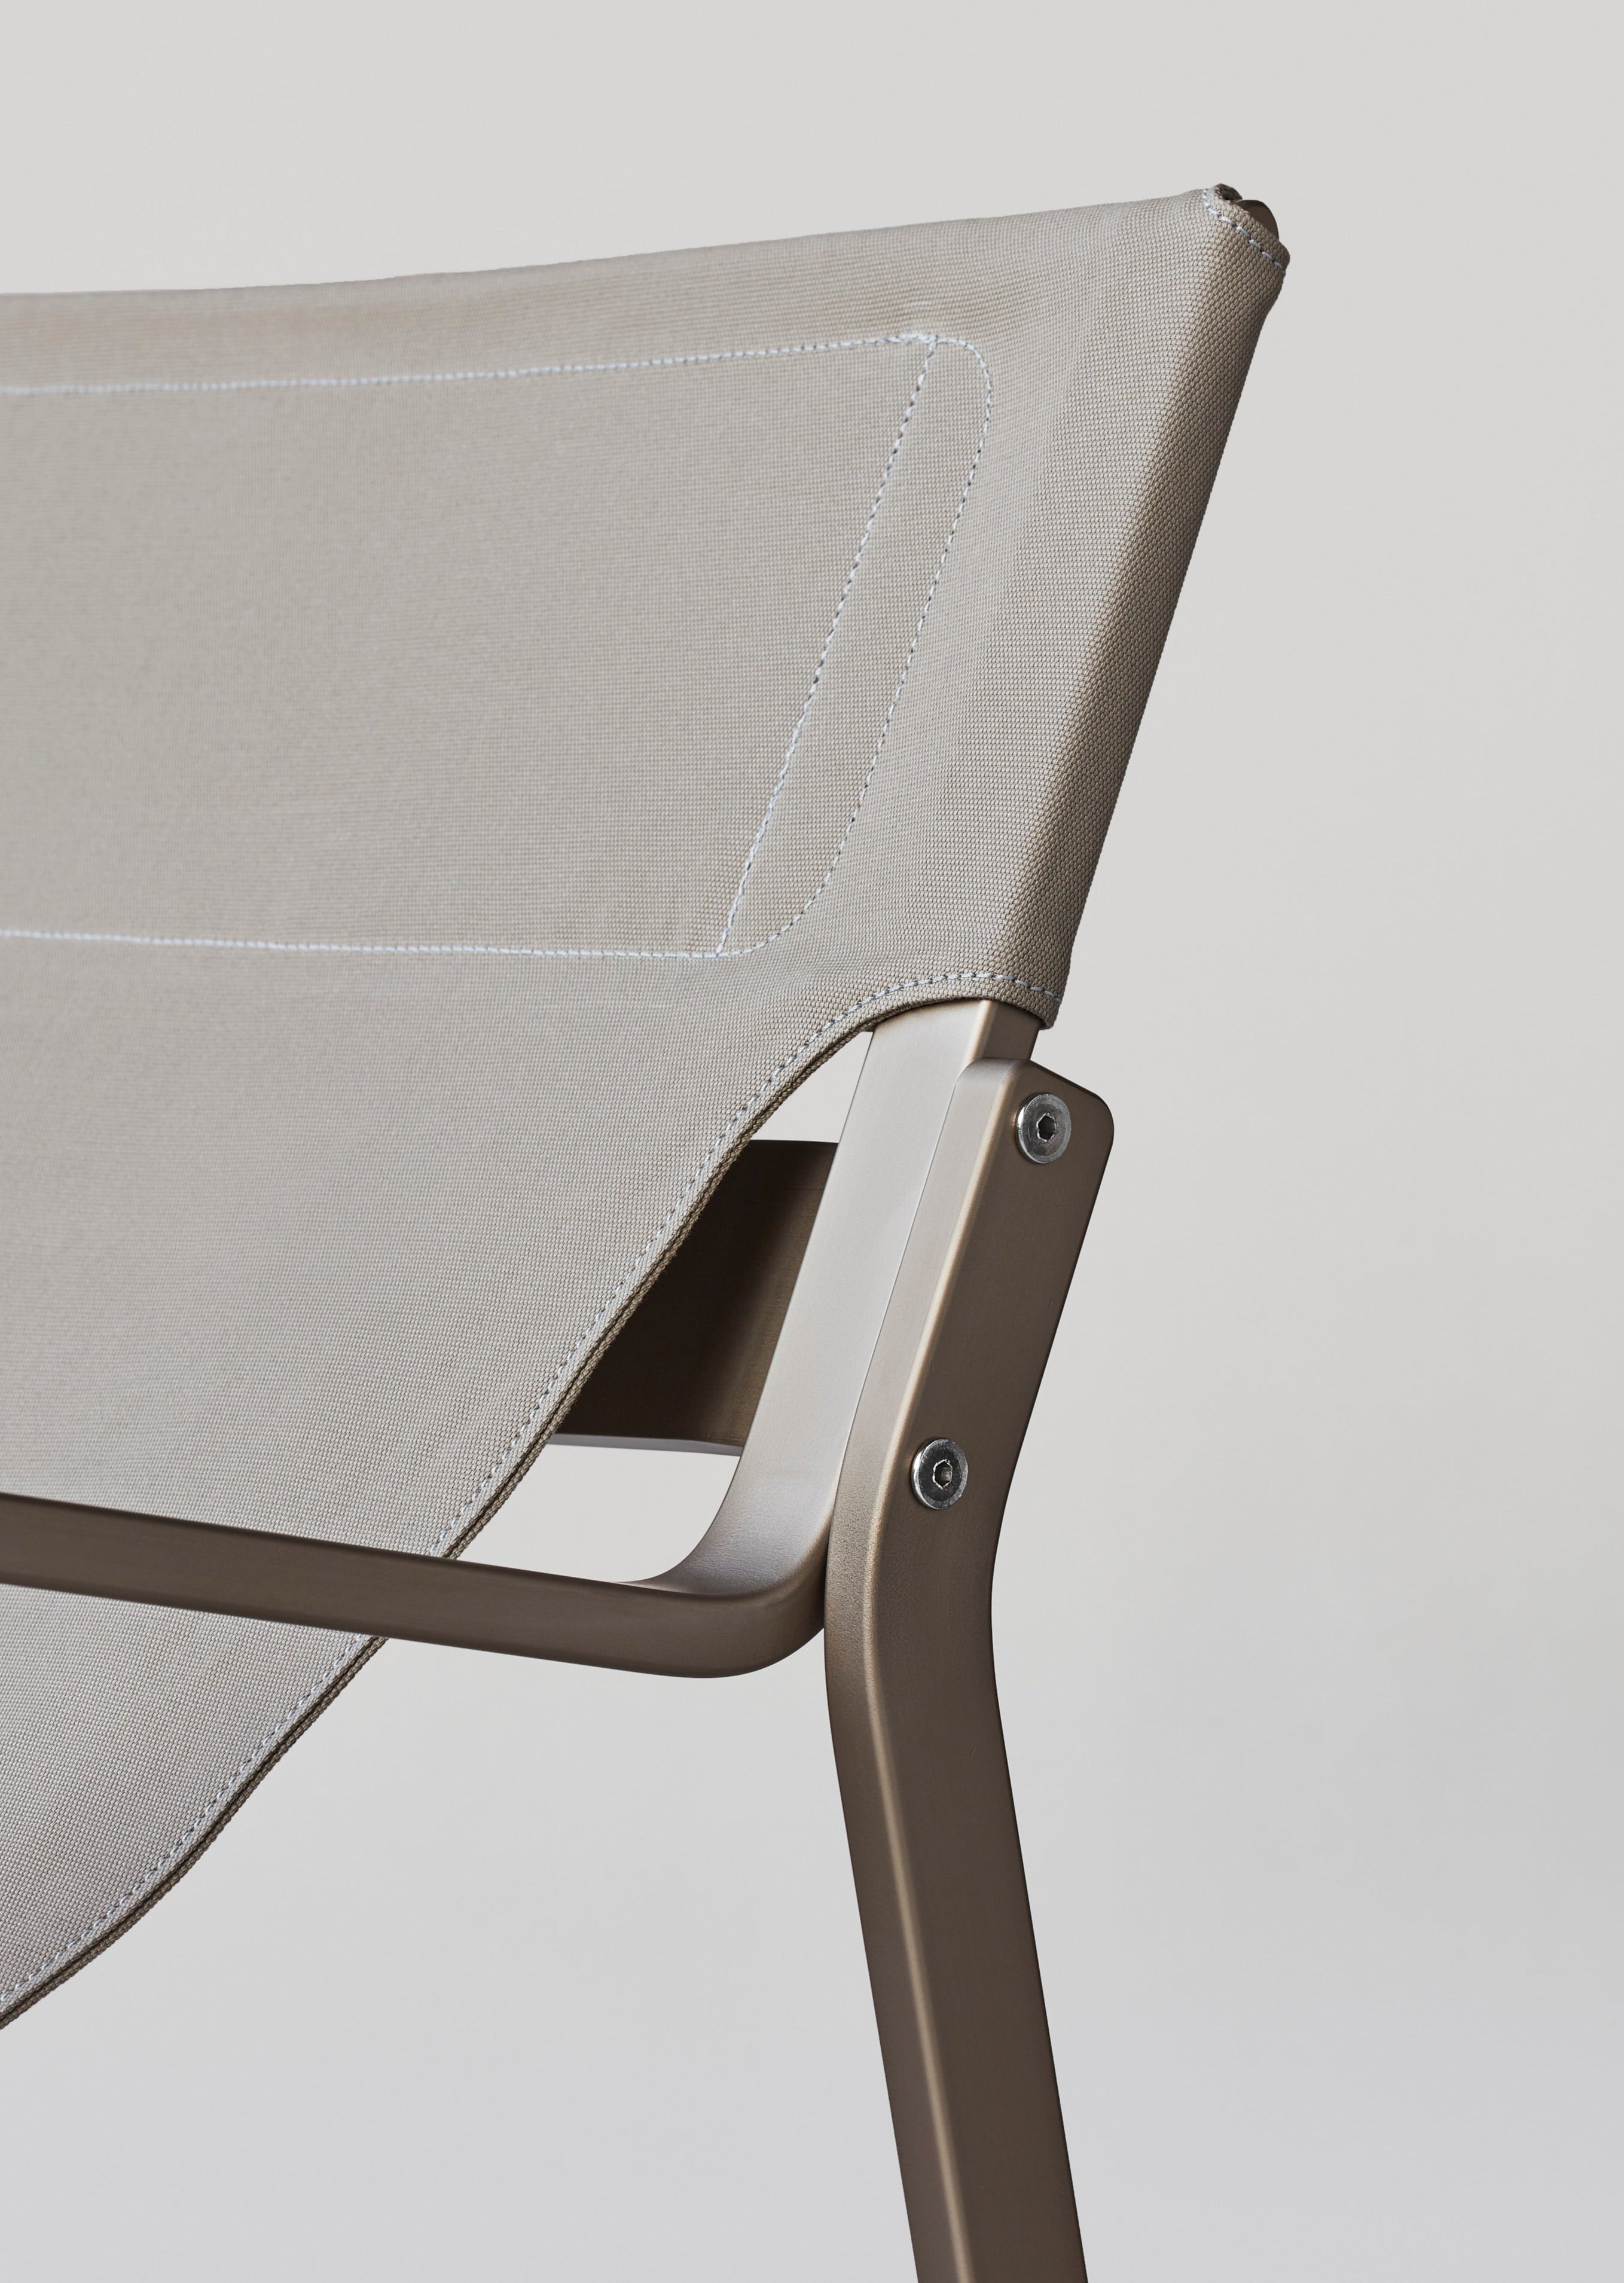 Ensō Lounge Chair – Anodized bronze aluminum / Black Bananatex